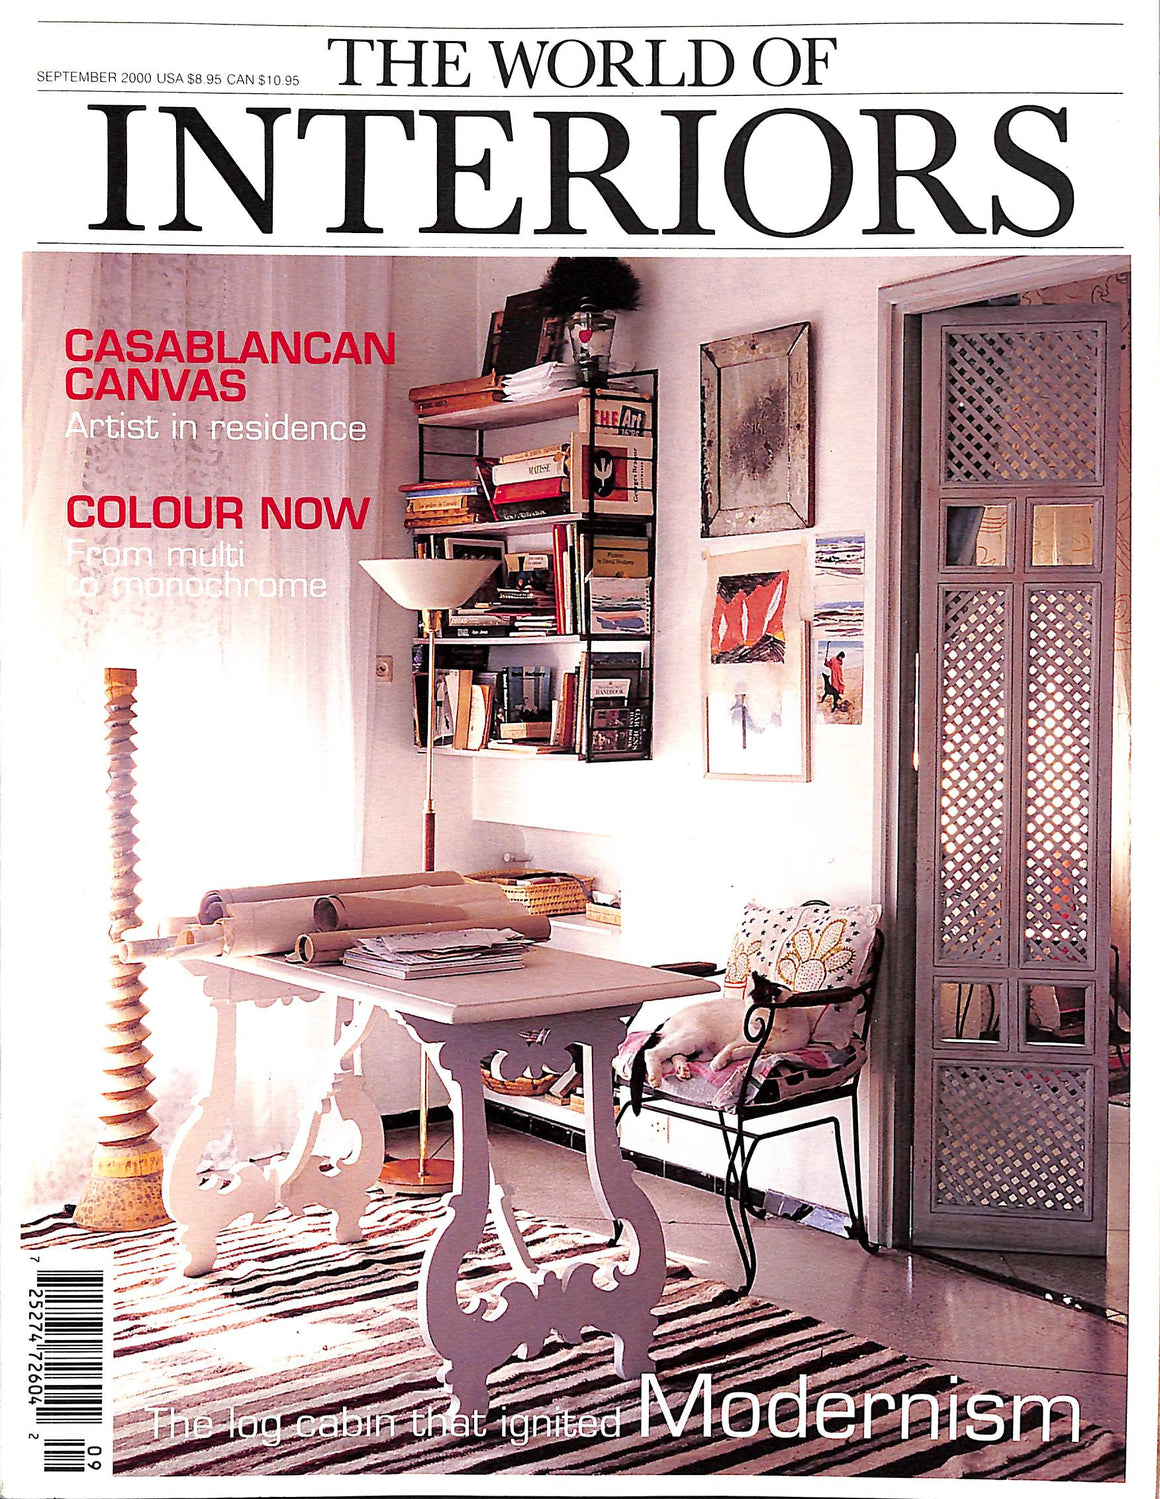 "The World Of Interiors" September 2000